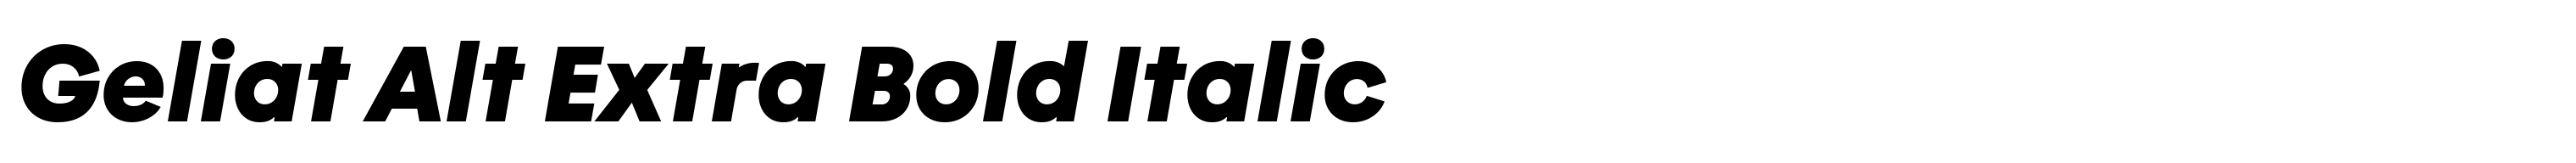 Geliat Alt Extra Bold Italic